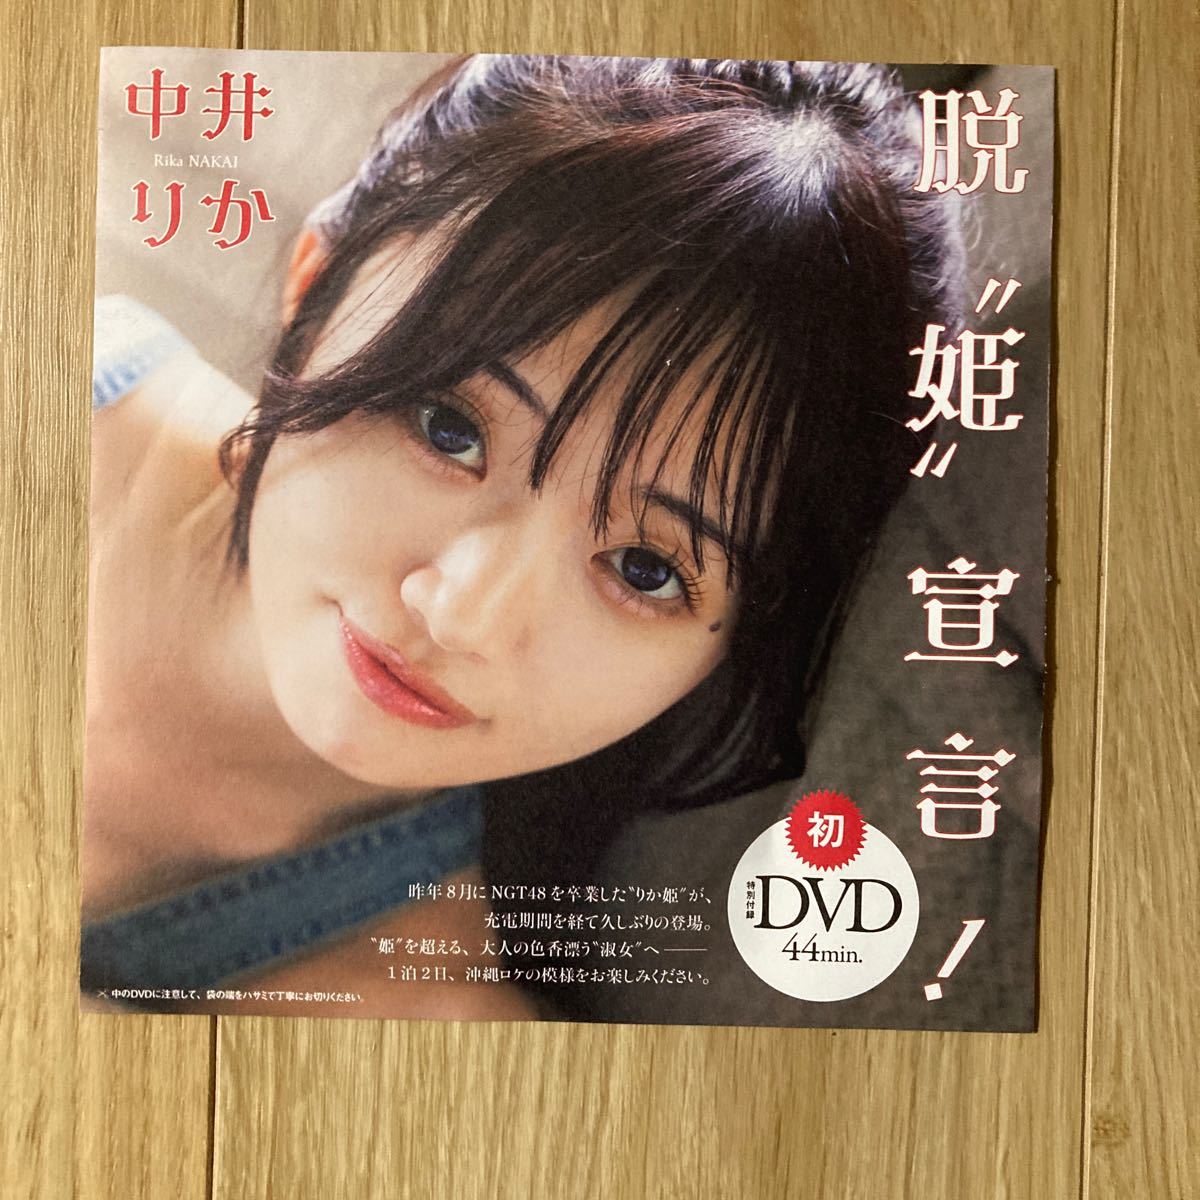 元NGT48 中井りか　playboy誌付録DVD1枚(44分、未開封)_画像1